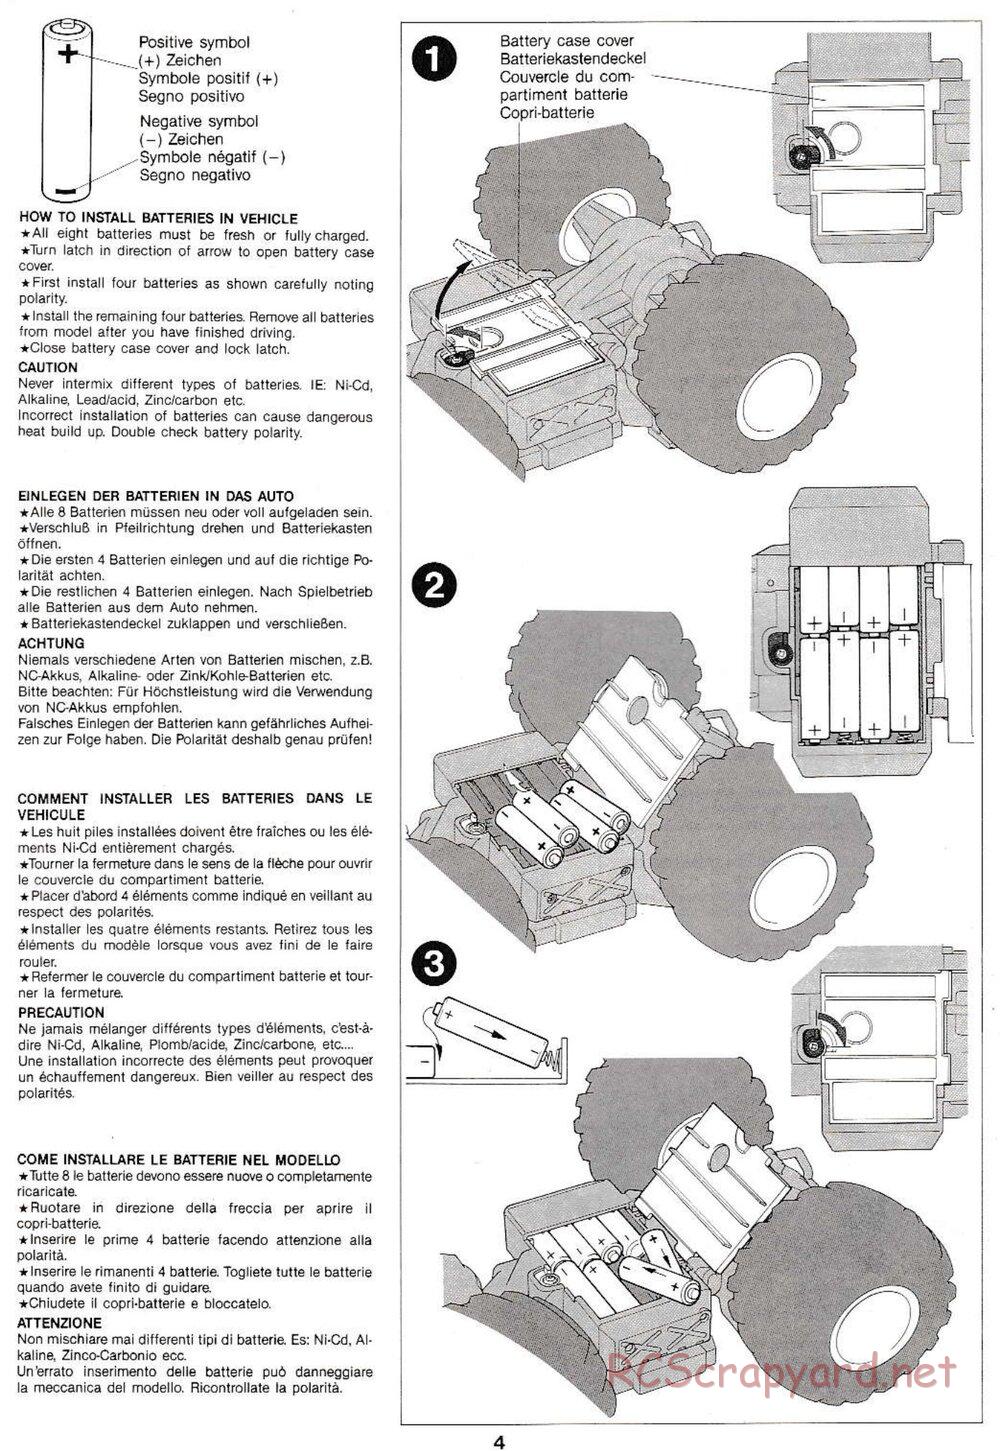 Tamiya - Clod Buster QD Chassis - Manual - Page 4